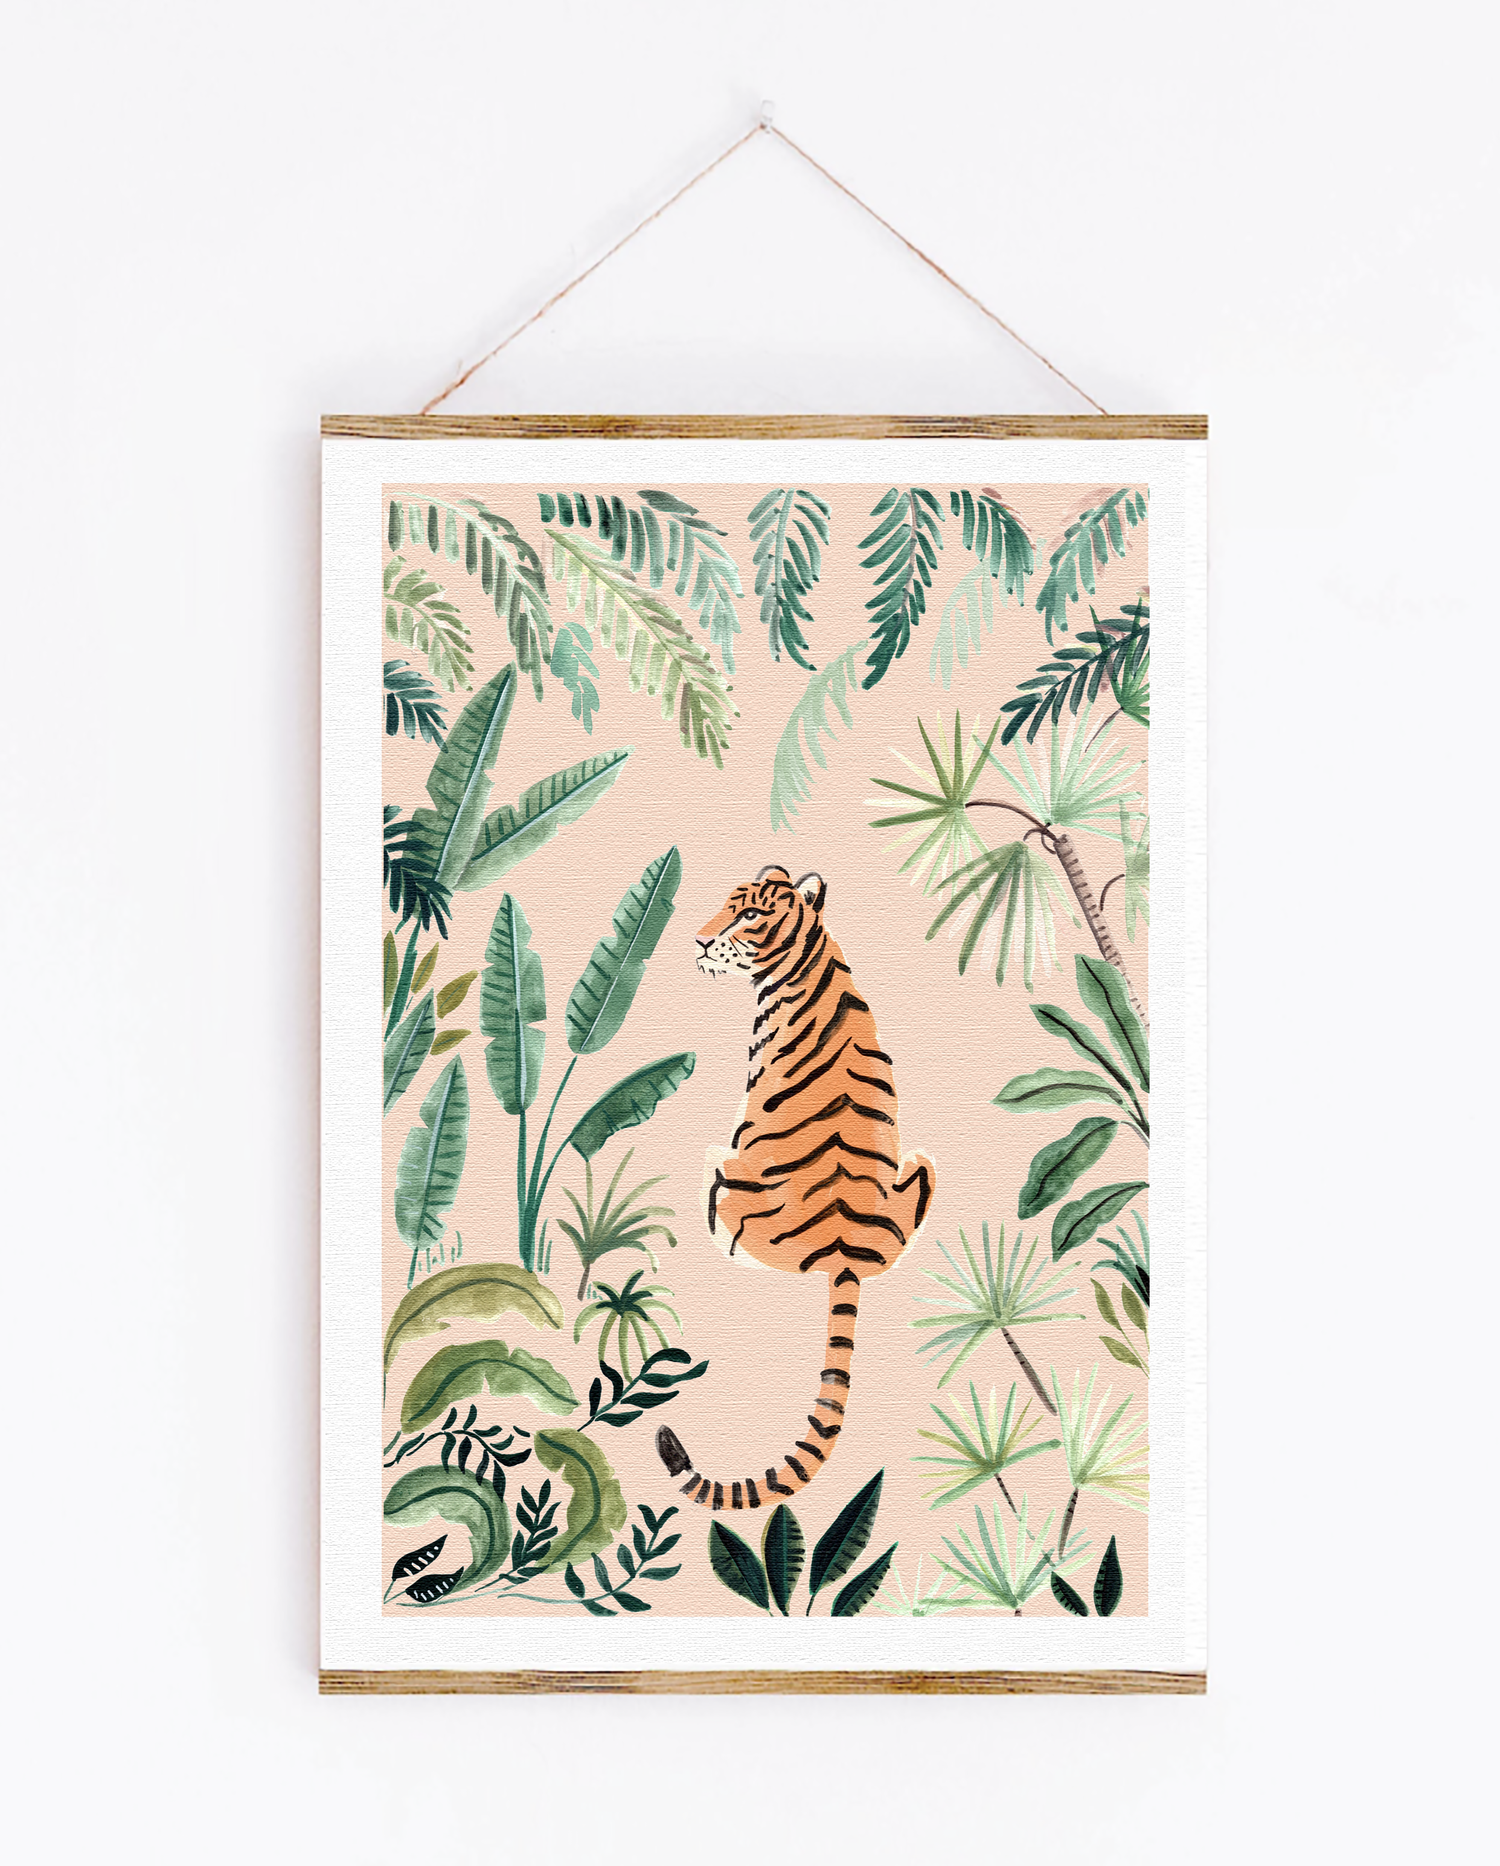 My head is a Jungle Jungle - Tigers Poster by kajumaprints